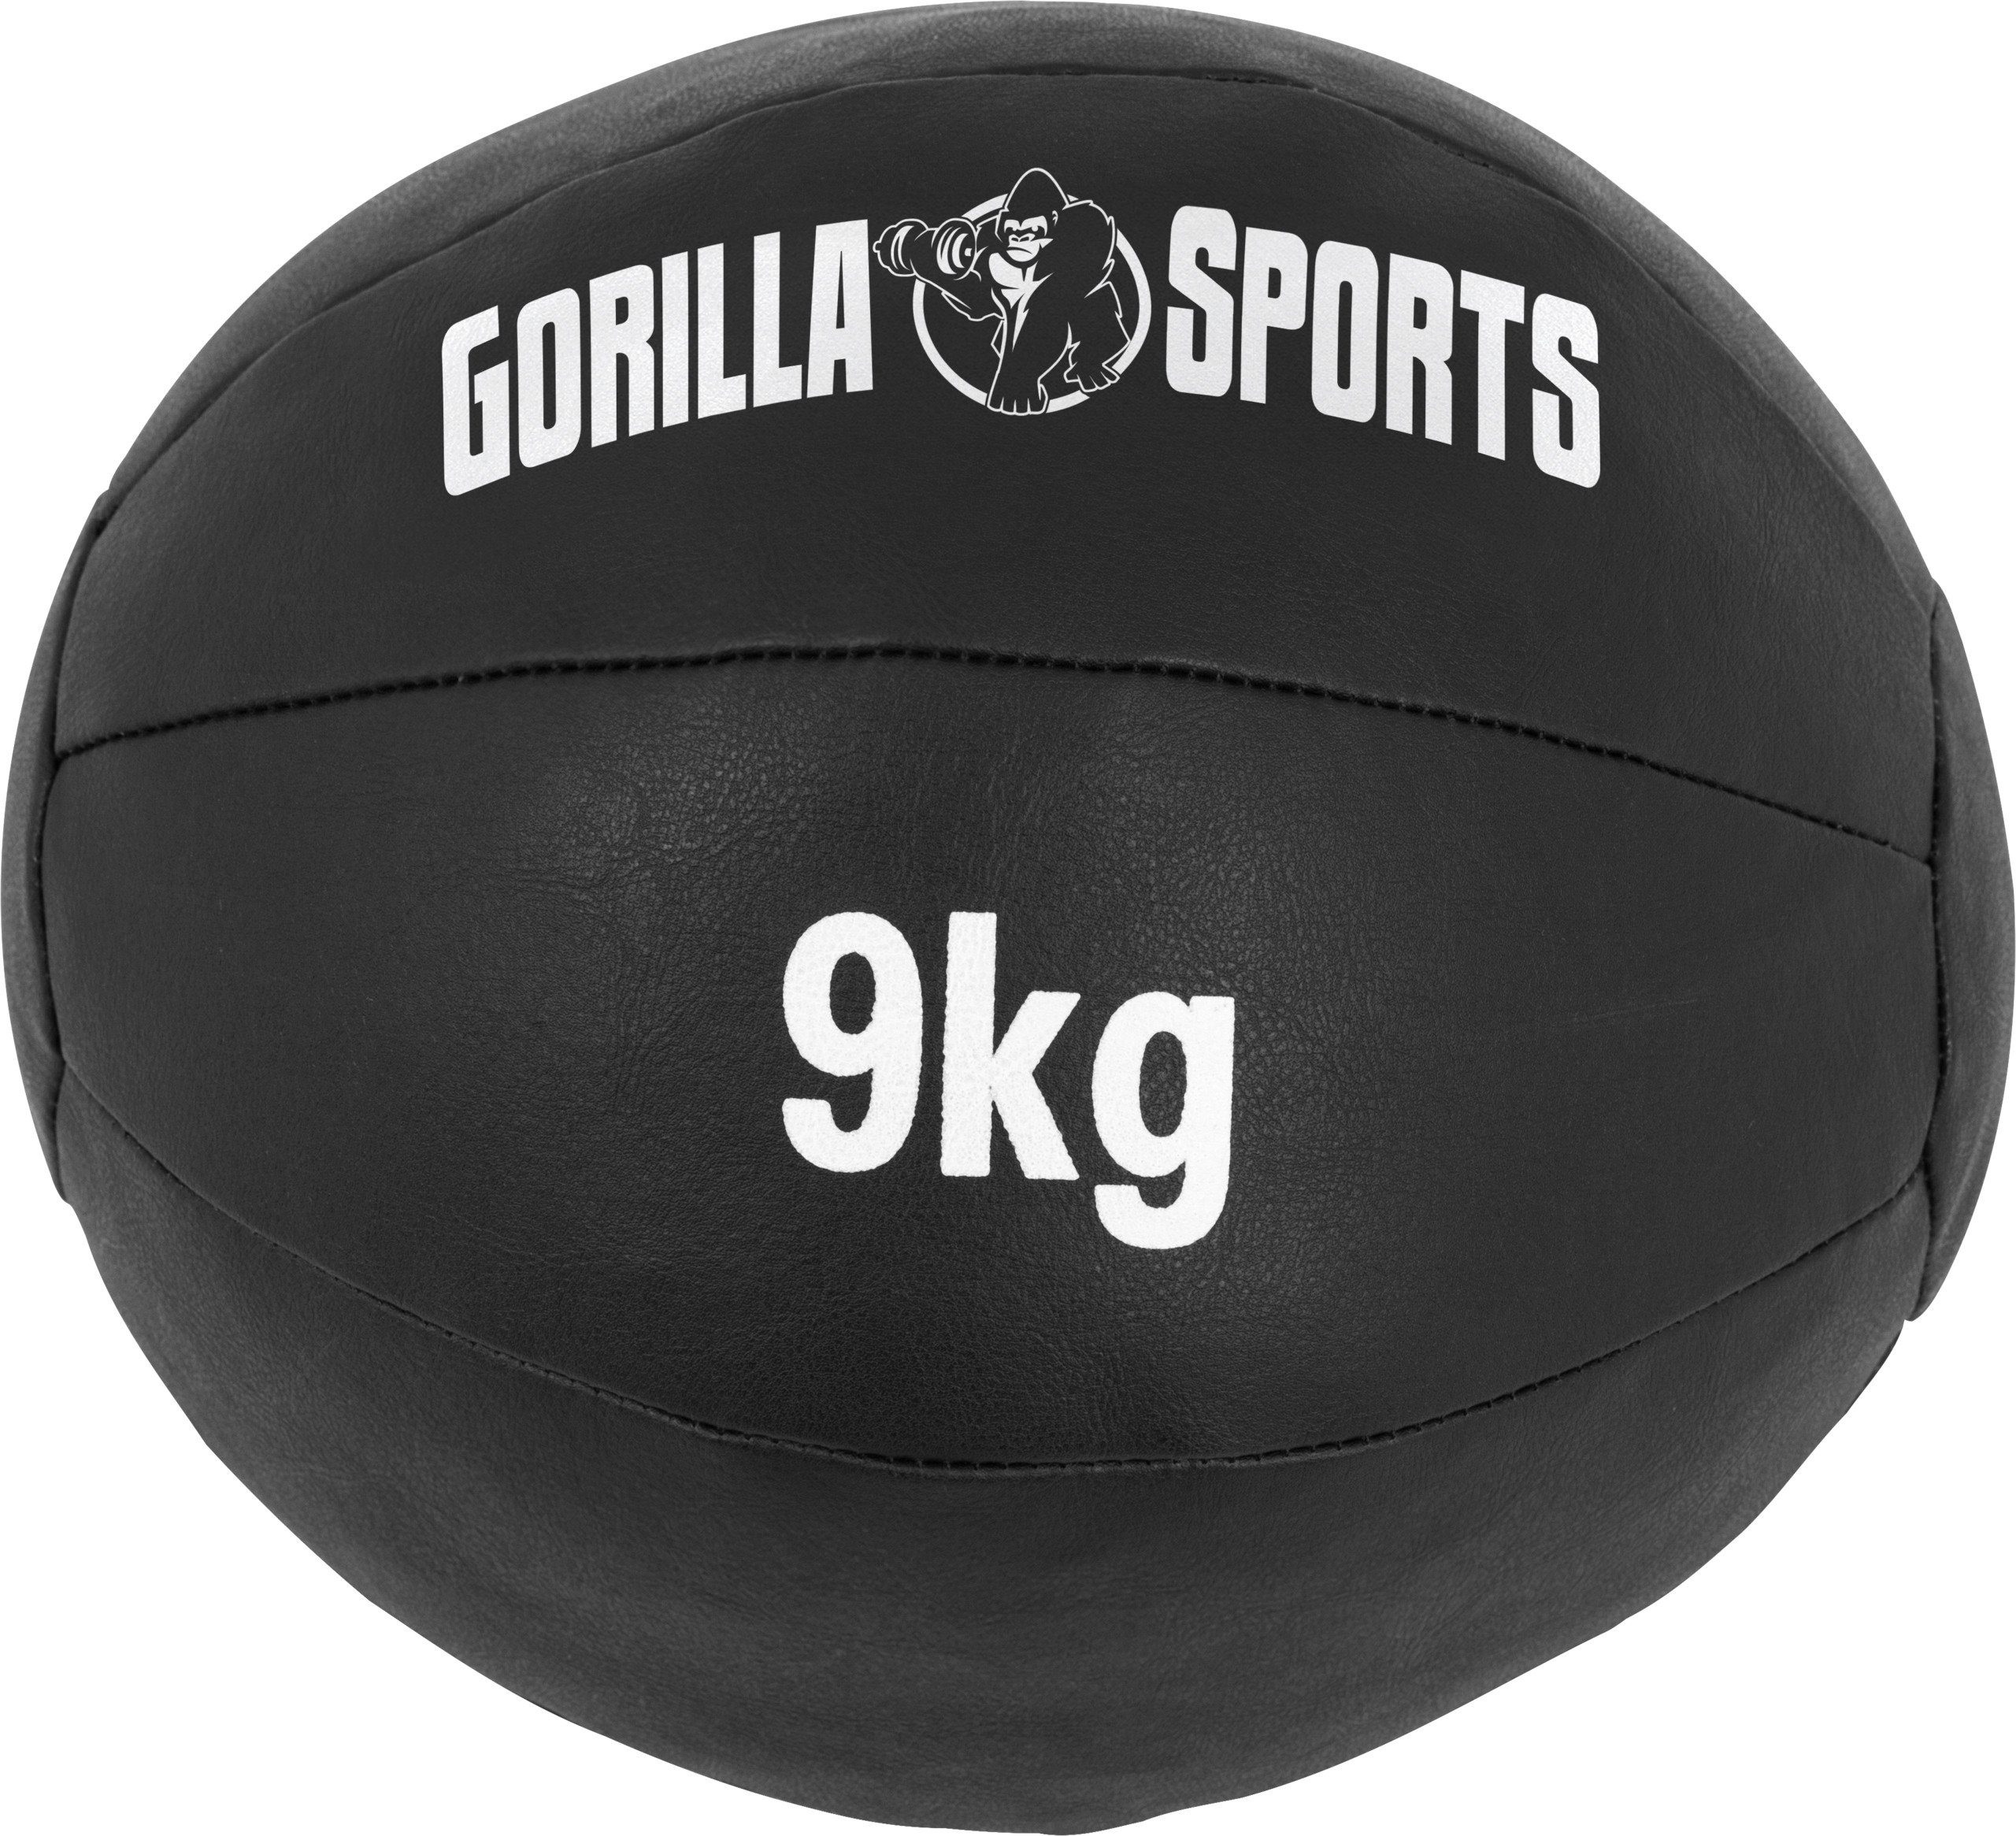 GORILLA SPORTS Medizinball Einzeln/Set, 29cm, aus Leder, Trainingsball, Fitnessball, Gewichtsball 9 kg